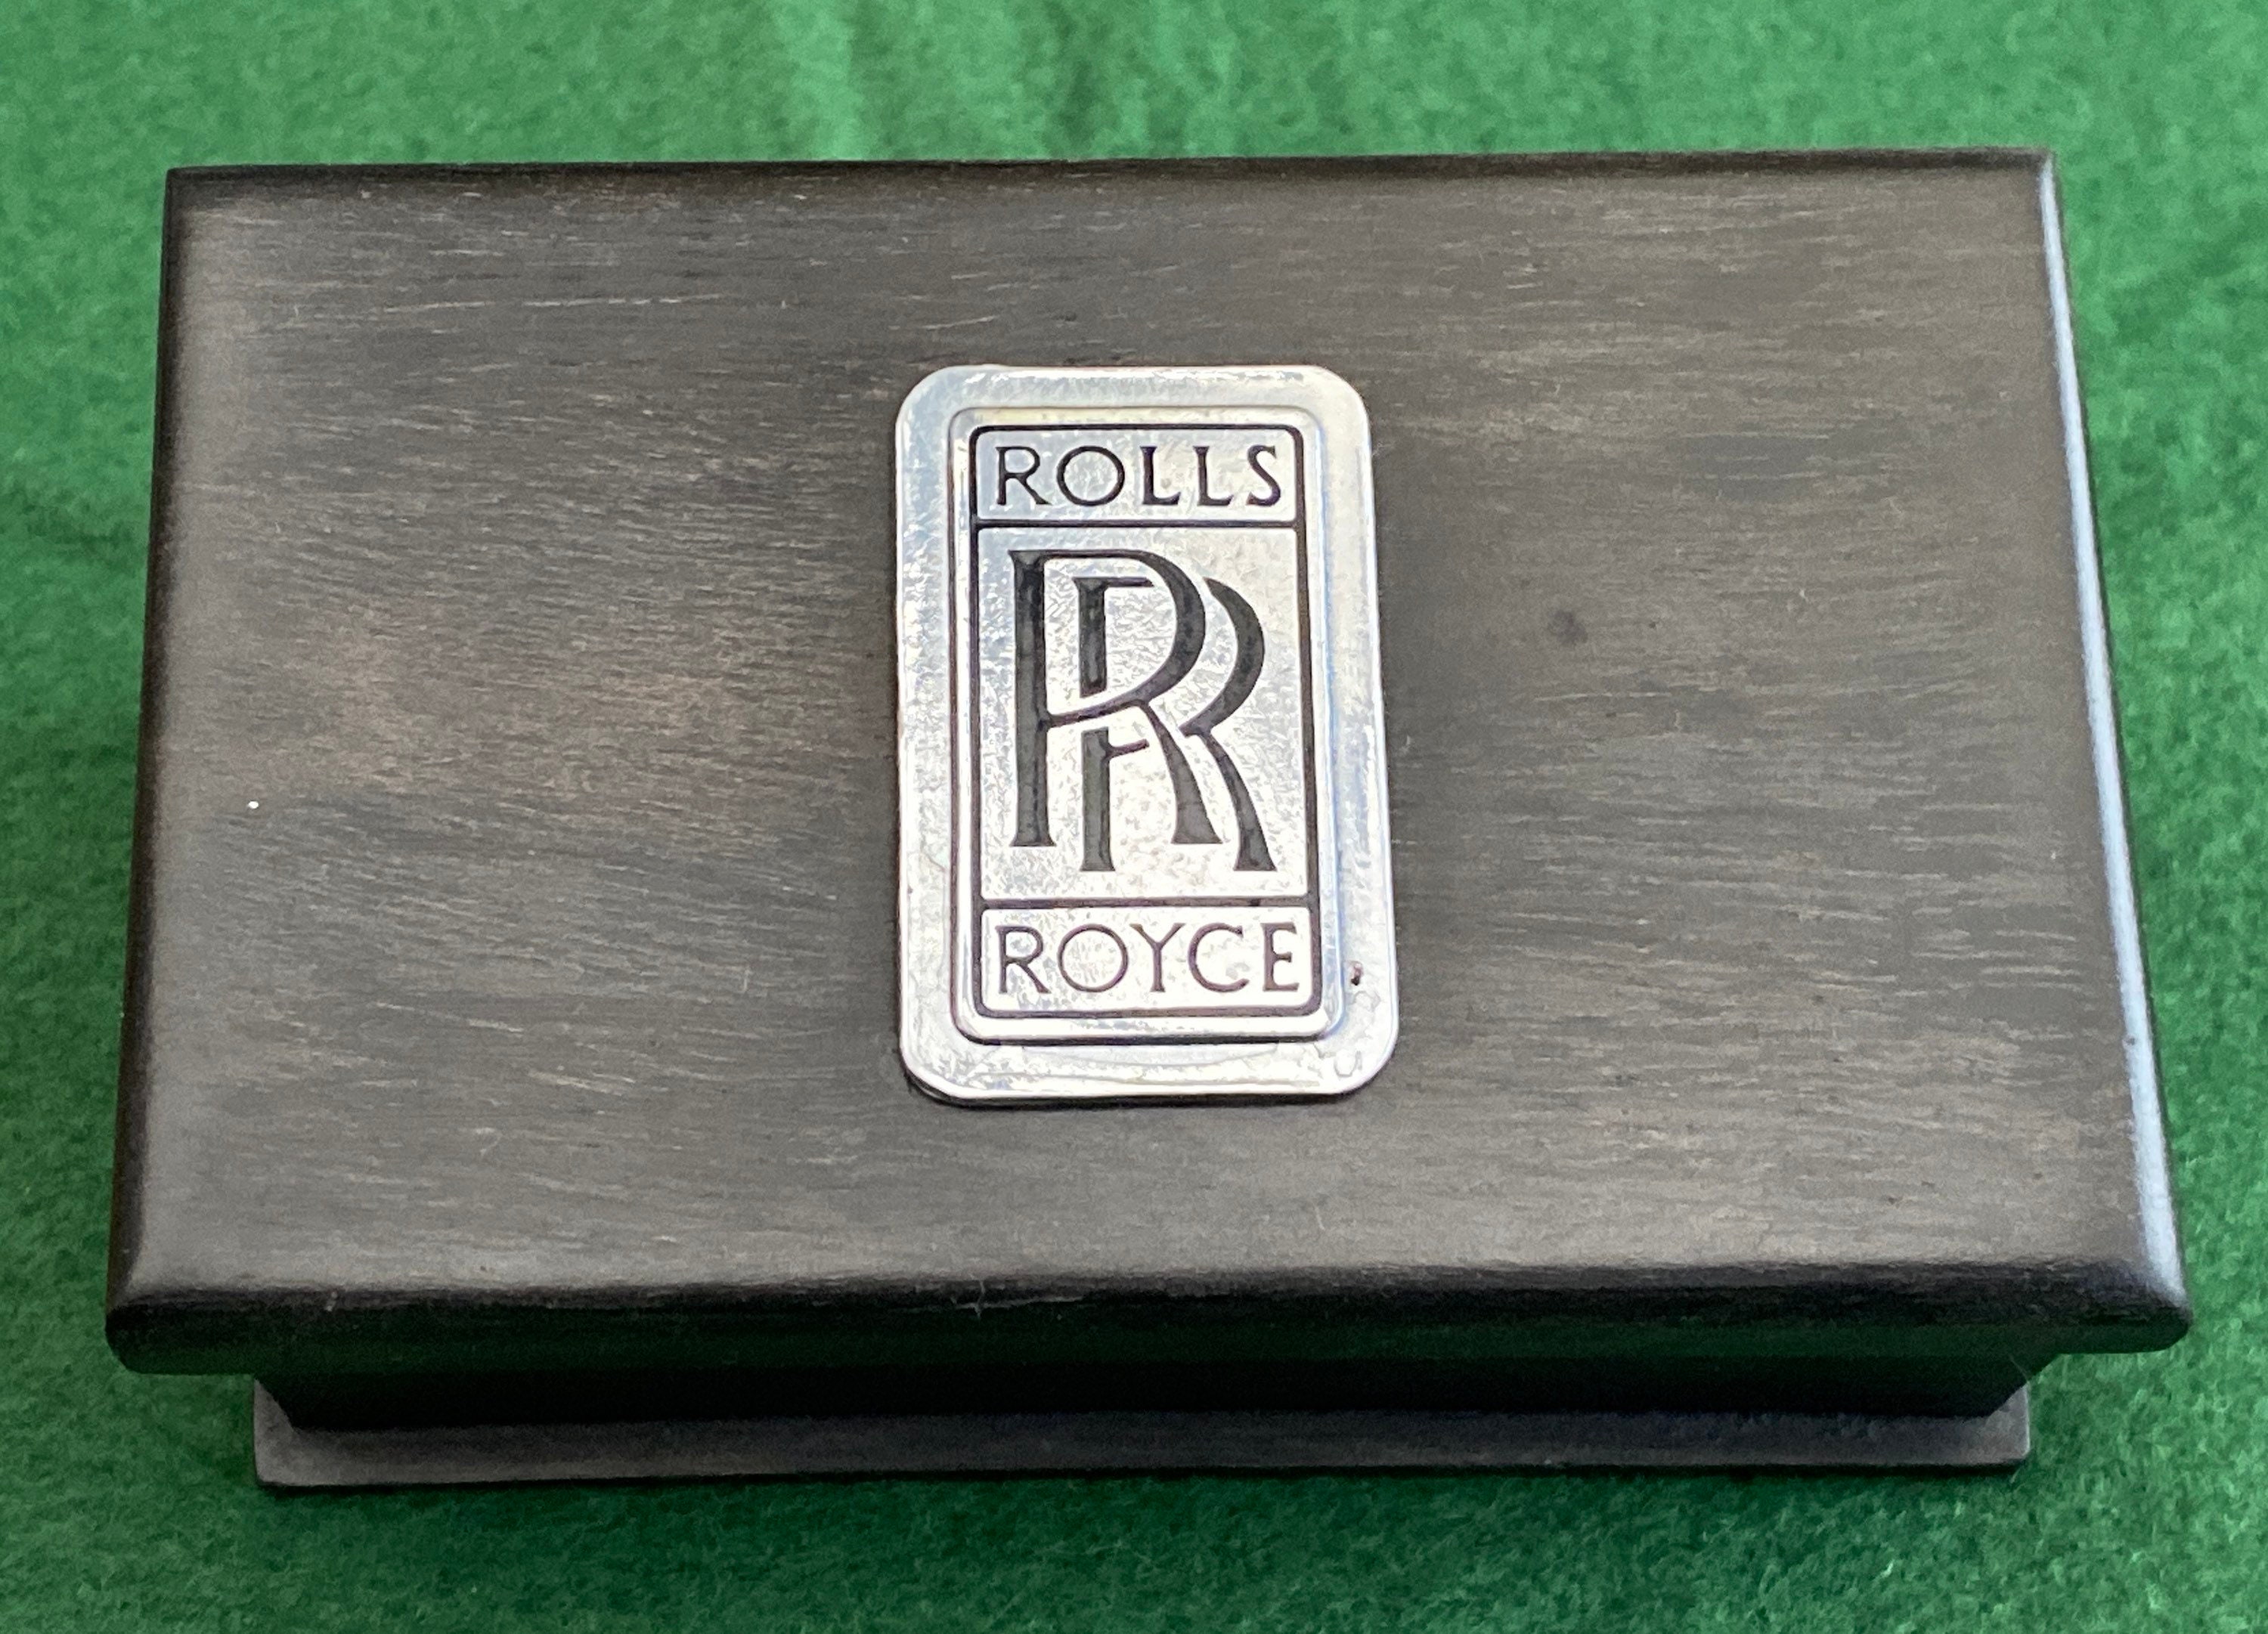 Original Rolls Royce Wraith key  OldJW Auctioneers